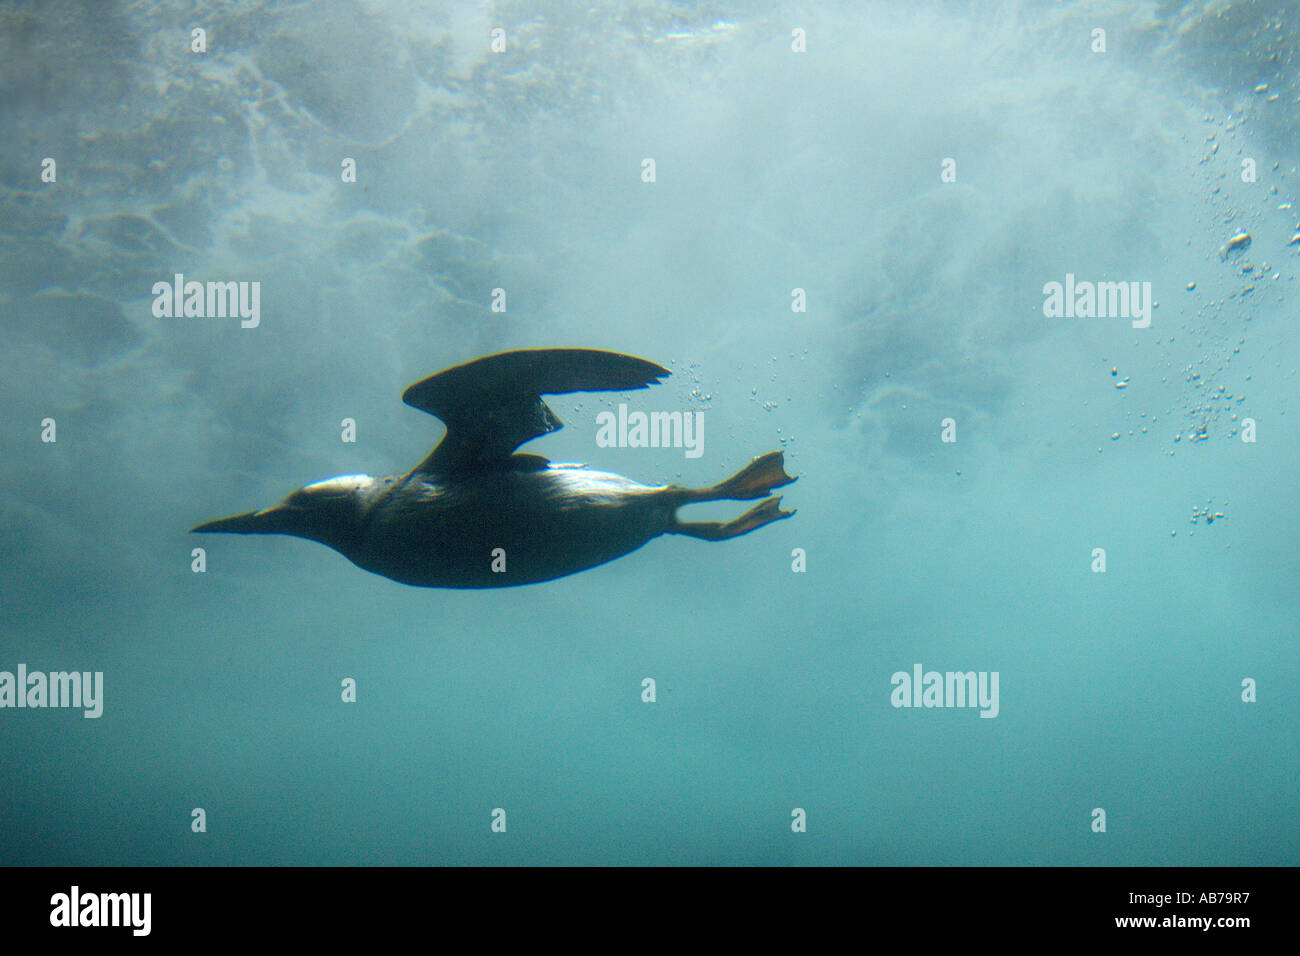 Common guillemot or common murre Uria aalge diving underwater Stock Photo